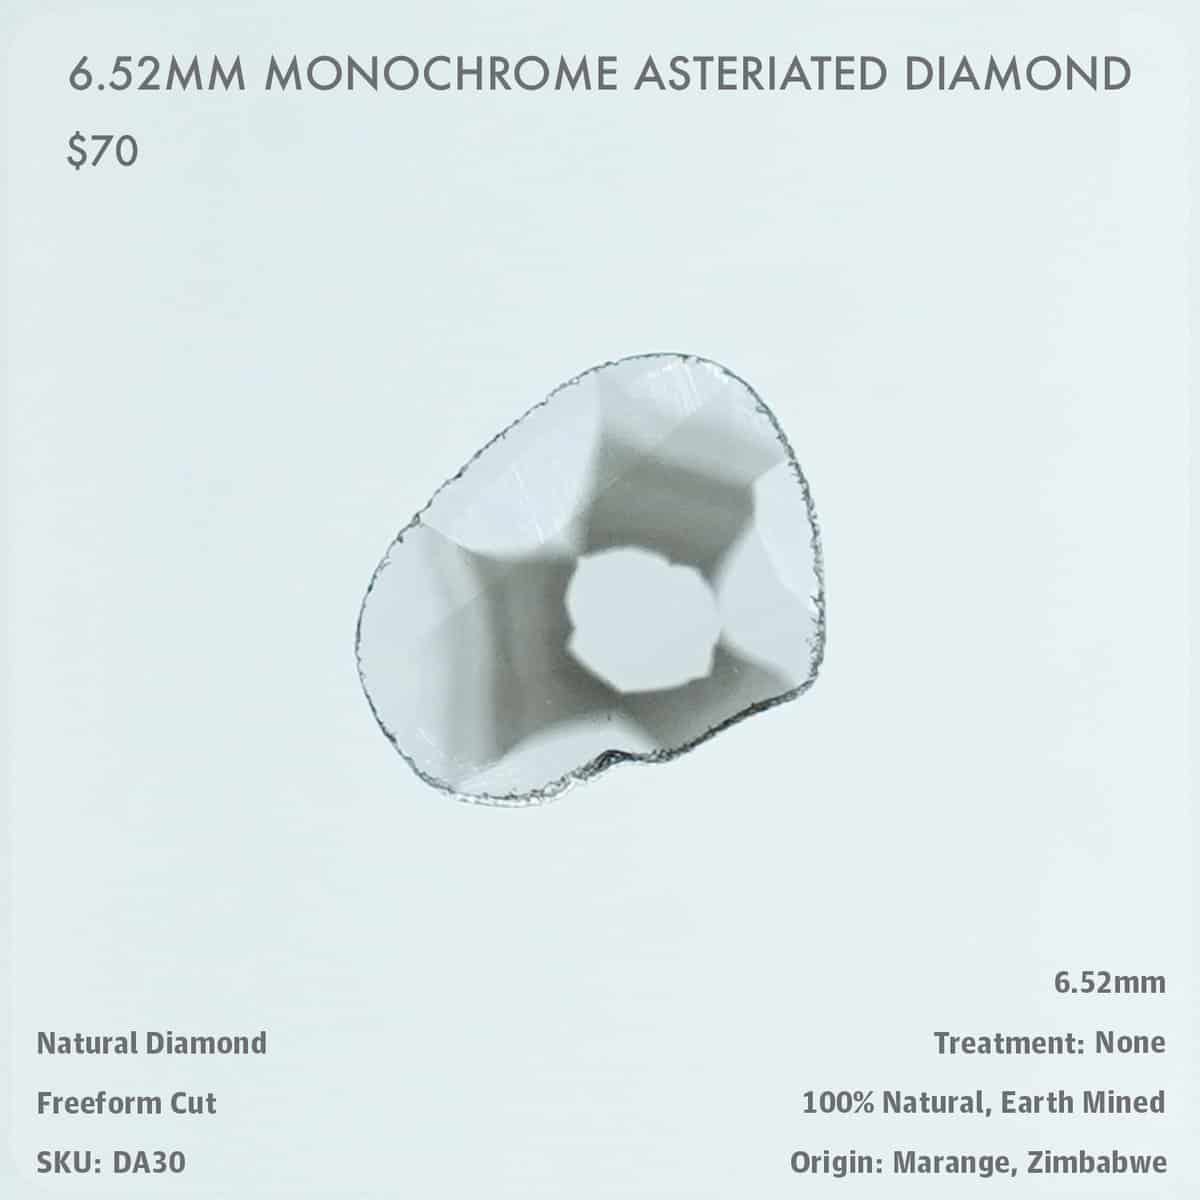 6.52mm Monochrome Asteriated Diamond